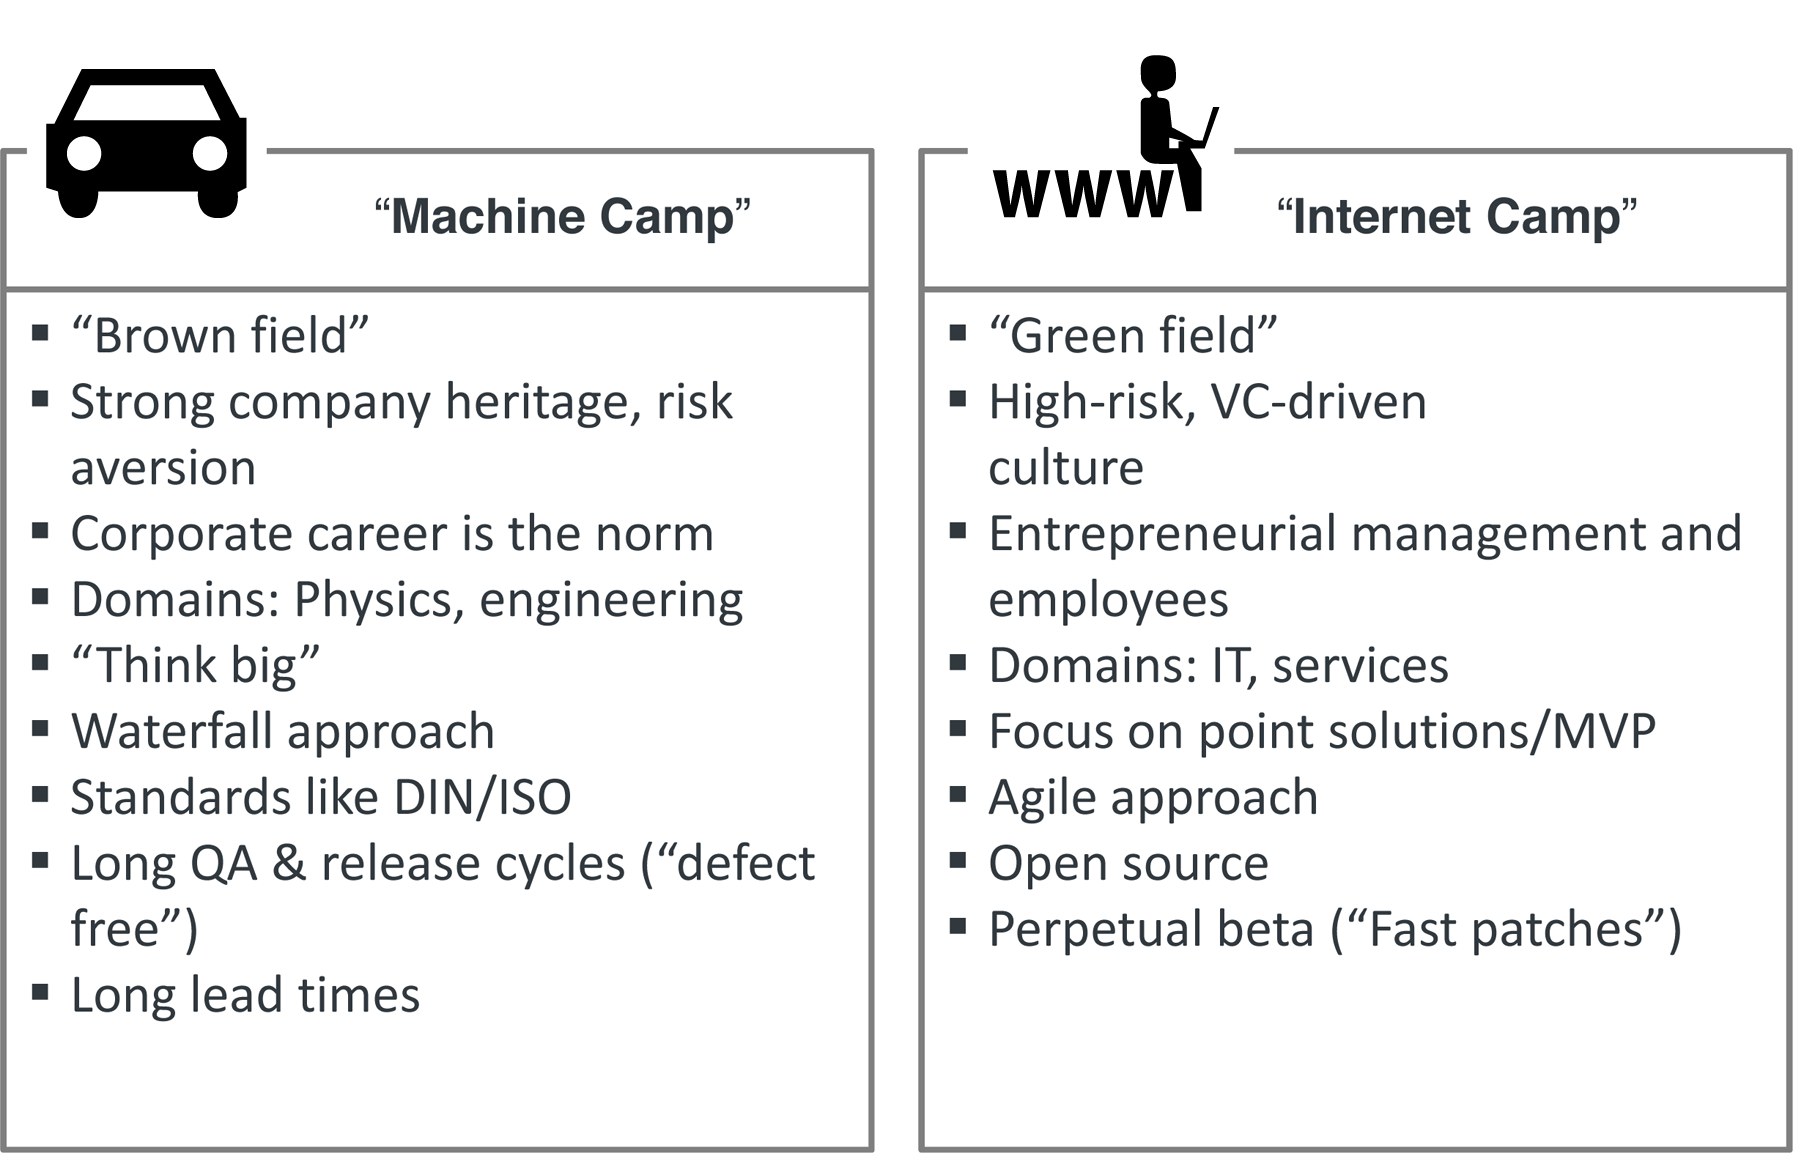 Machine camp versus Internet camp